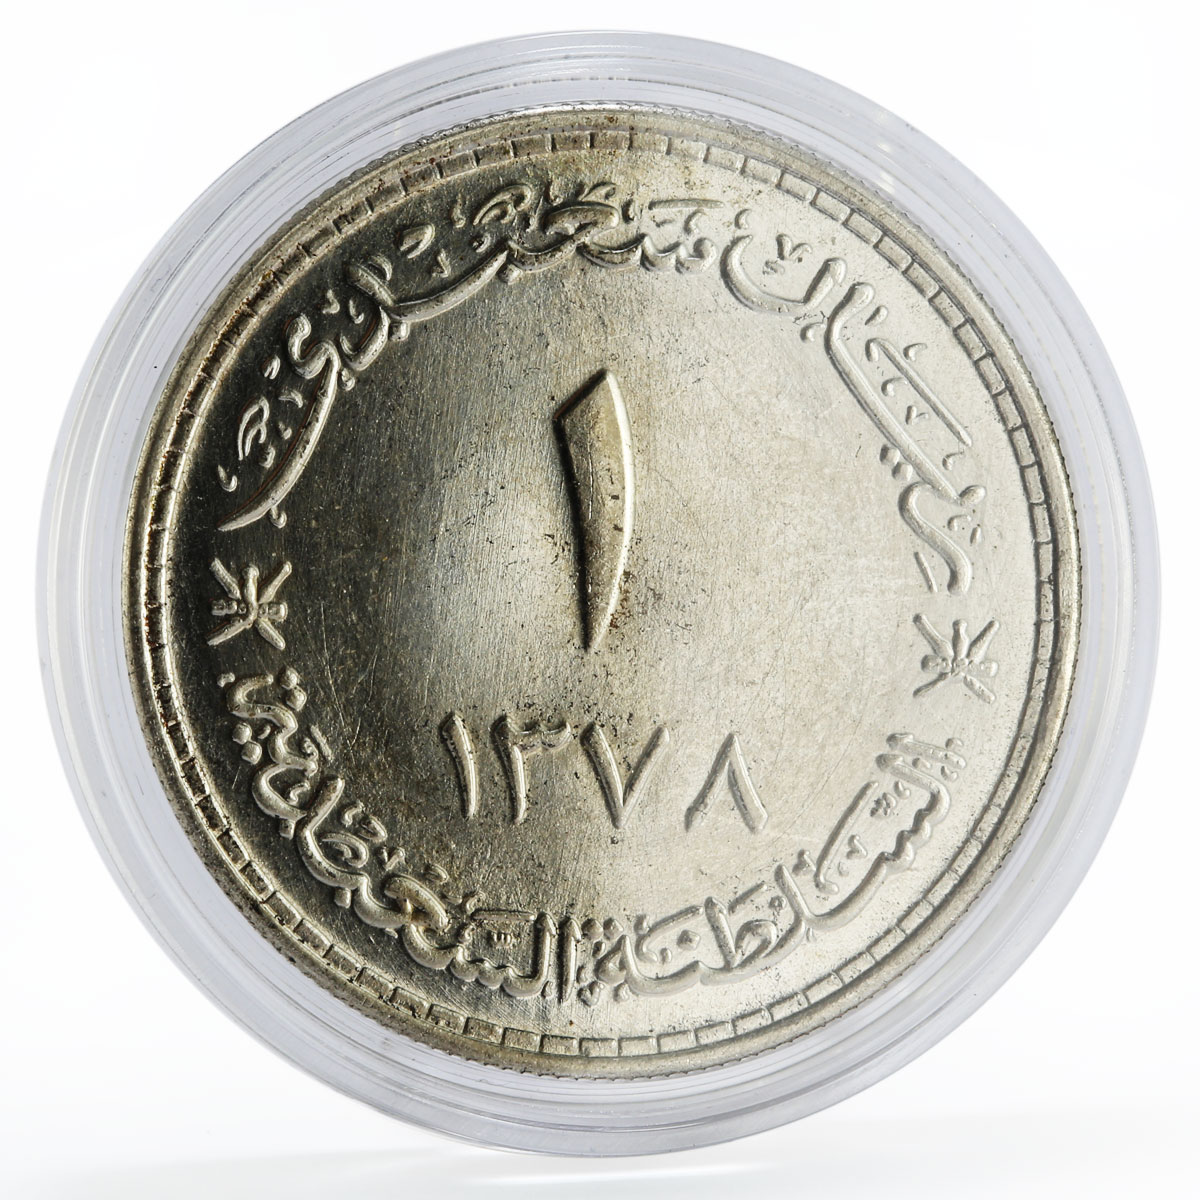 Muscat and Oman 1 saidi riyal Said Coat of Arms silver coin 1959